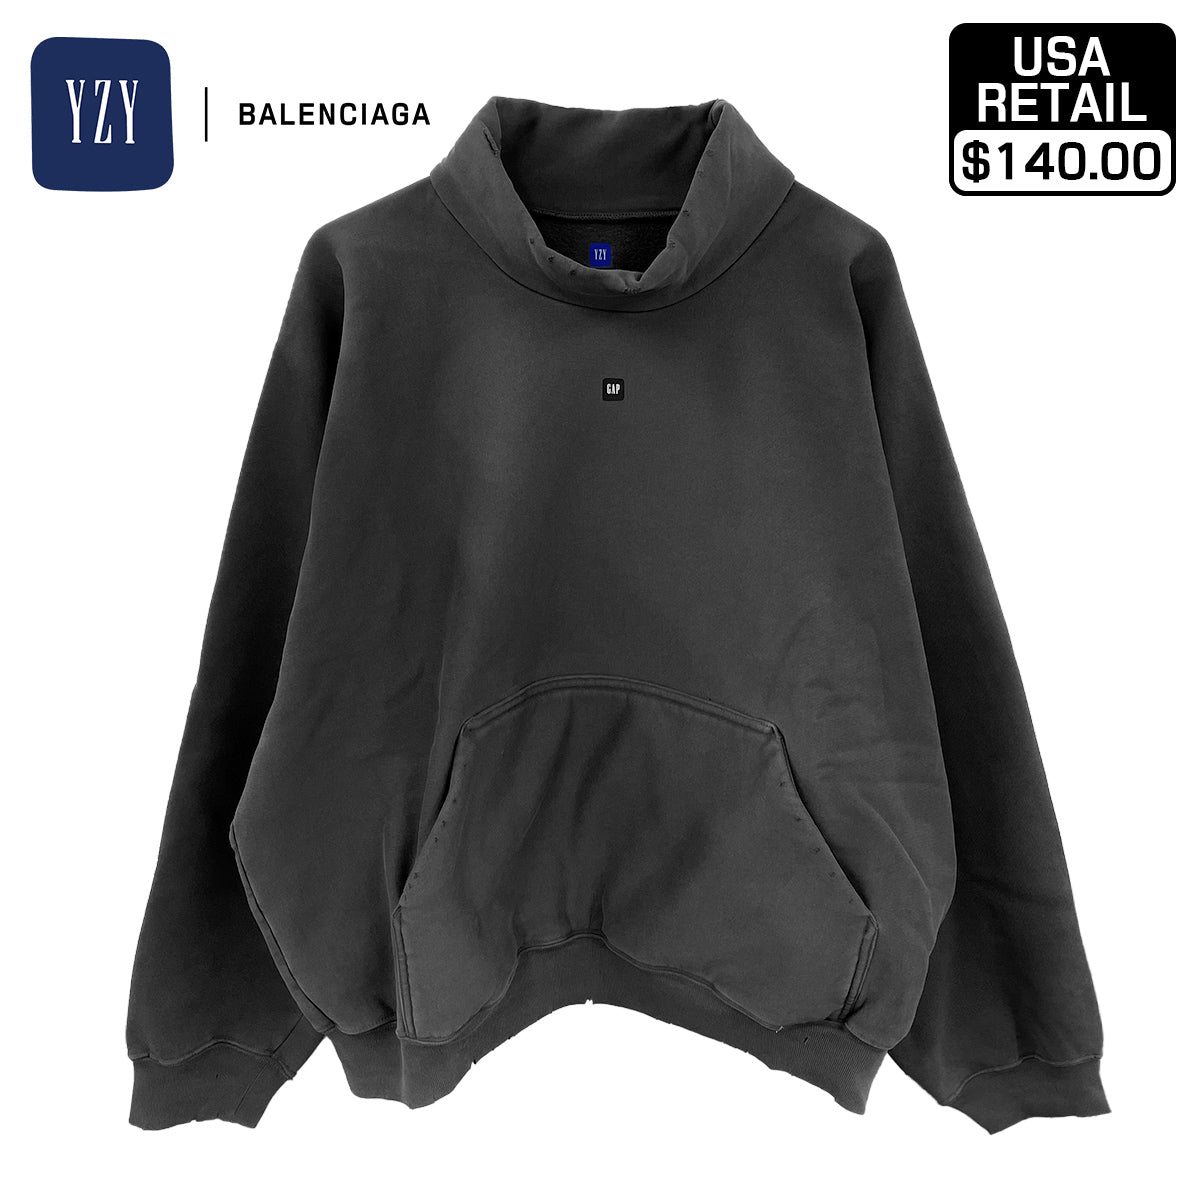 YEEZY GAP BALENCIAGA high neck sweaterトップス - smartstudio.com.br